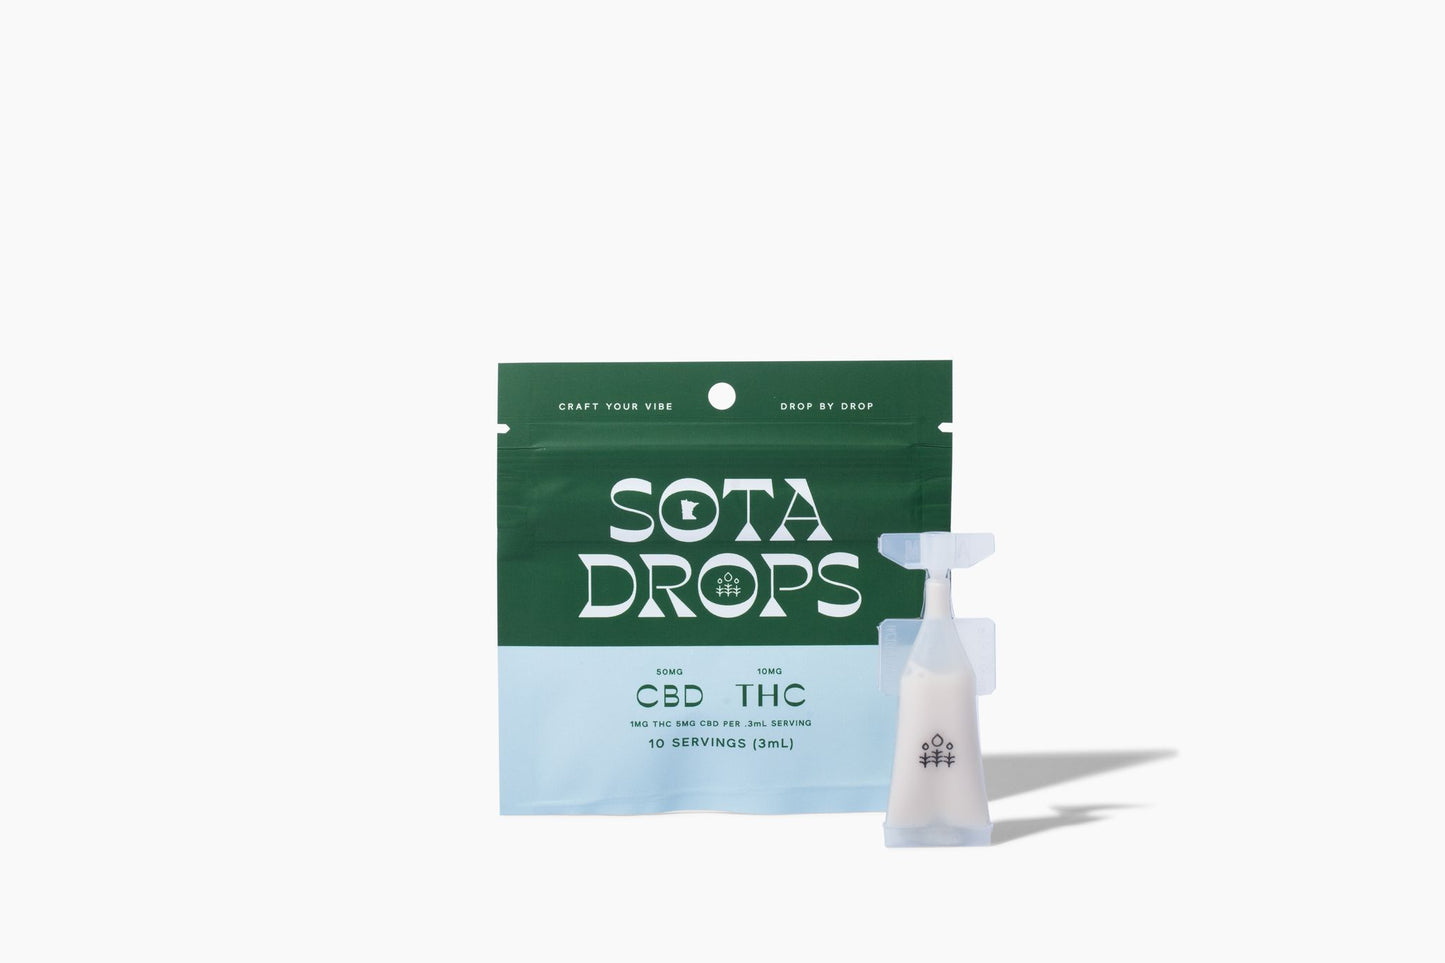 Sota Drops CBD + THC made by Superior Molecular